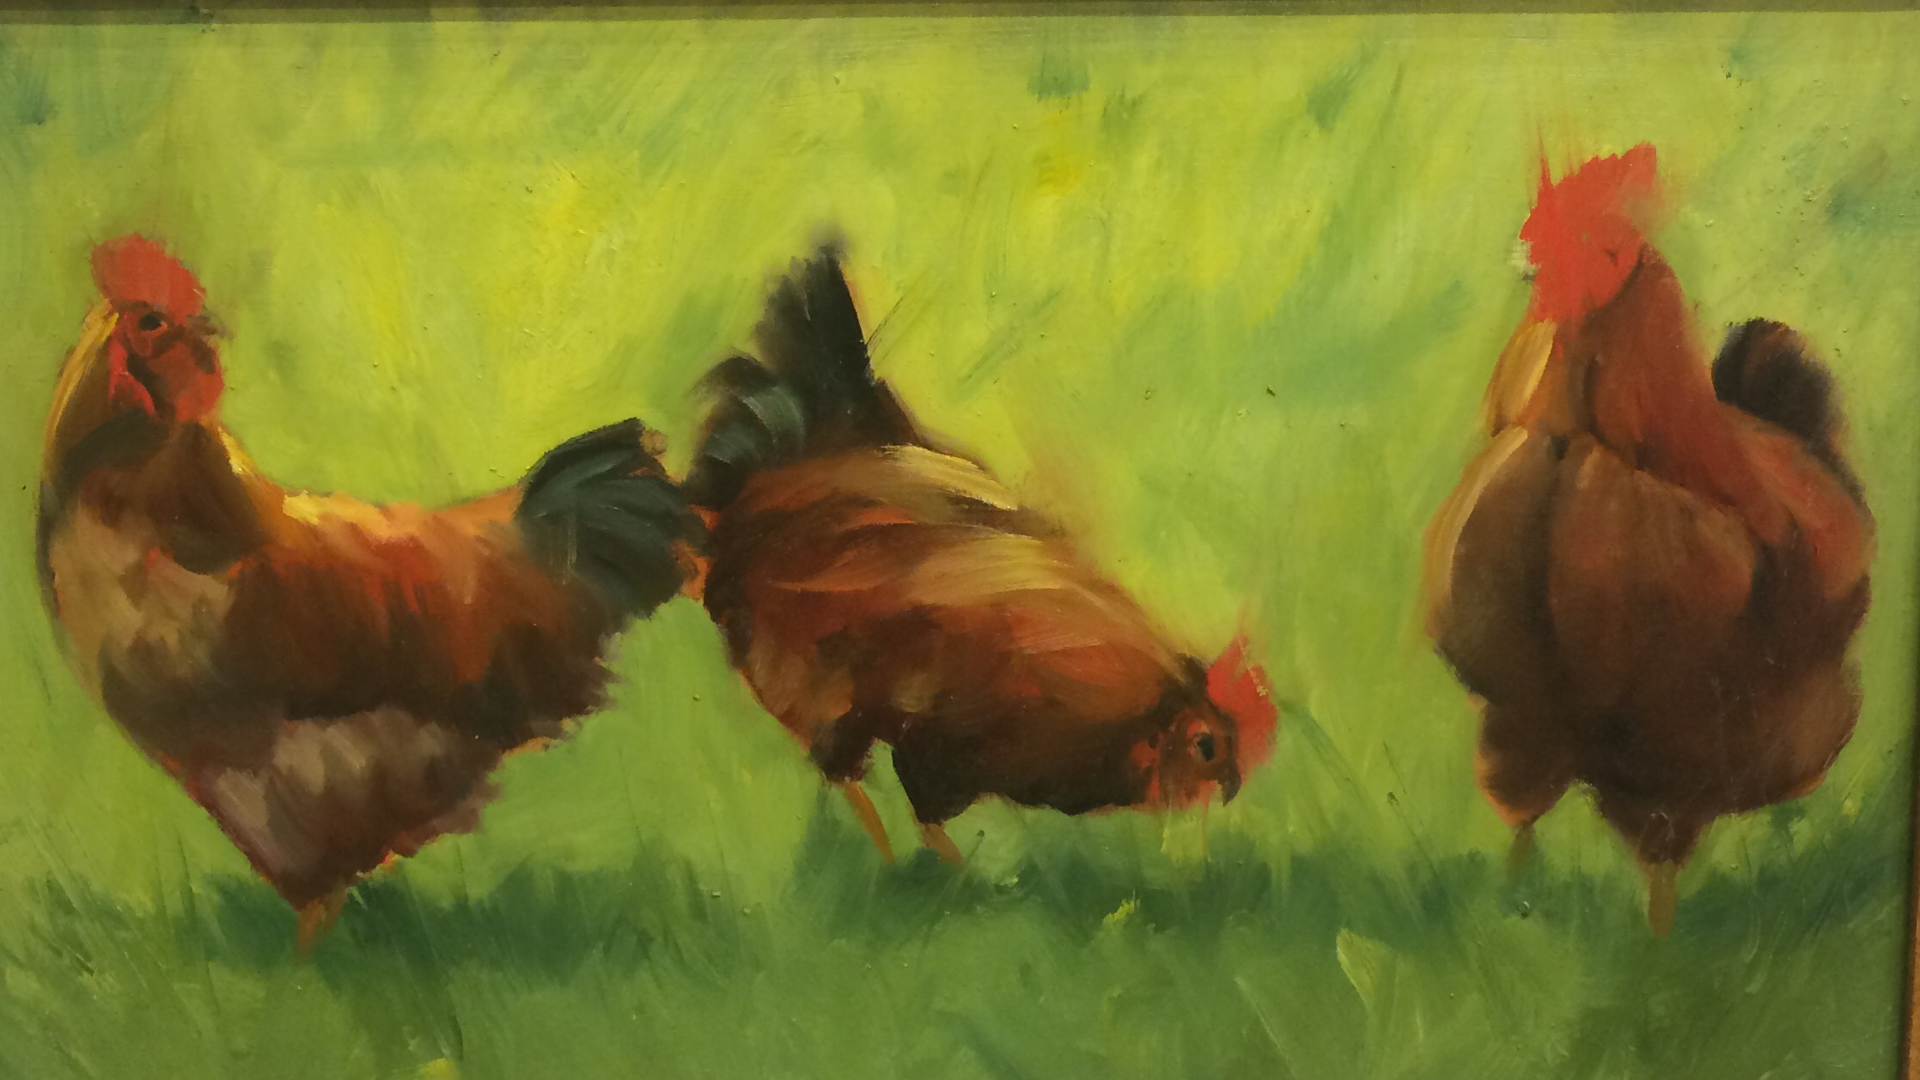 Chickens In The Grass by John Reynolds